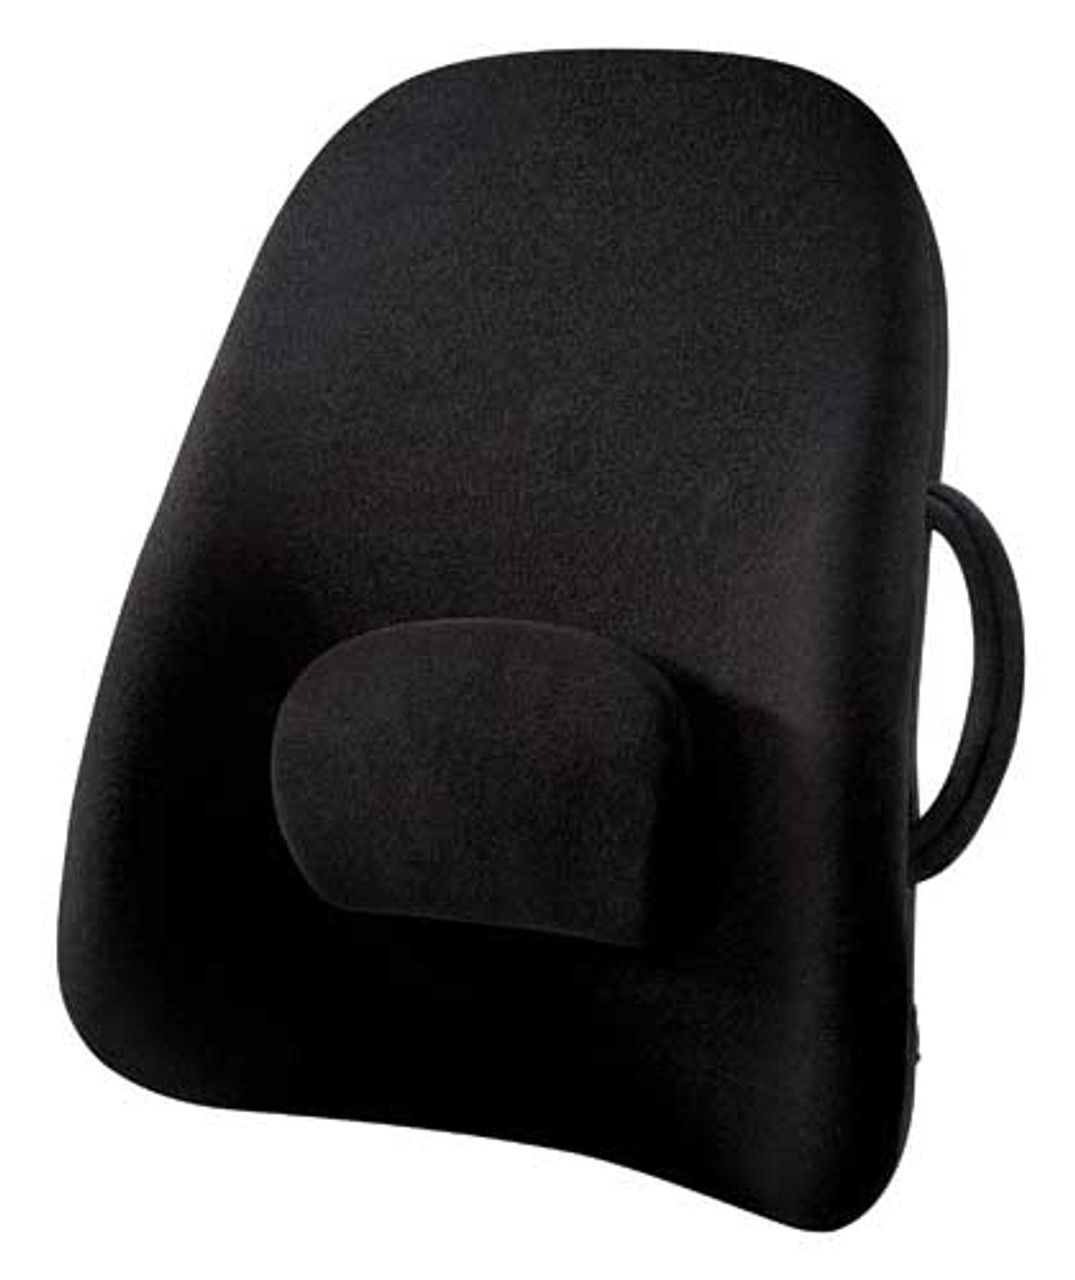 Obusforme CustomAIR Backrest w/ Adjustable Lumbar Support